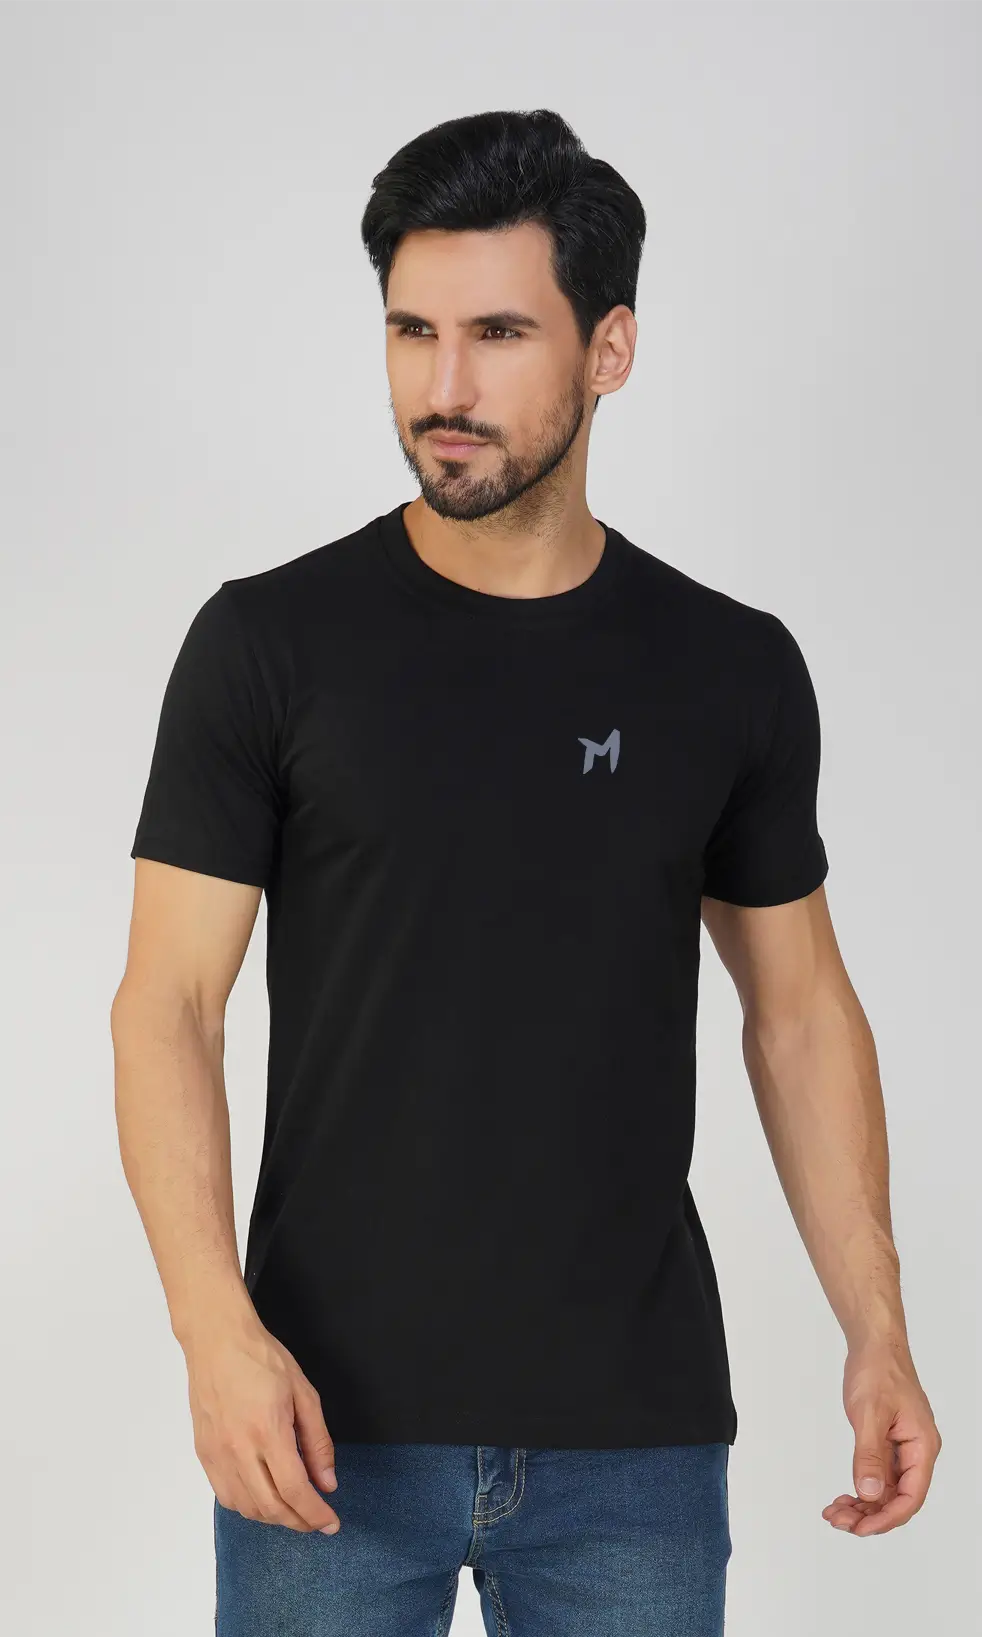 Mebadass Cotton Men's Basic Solid Halfsleeves T-shirts - Black